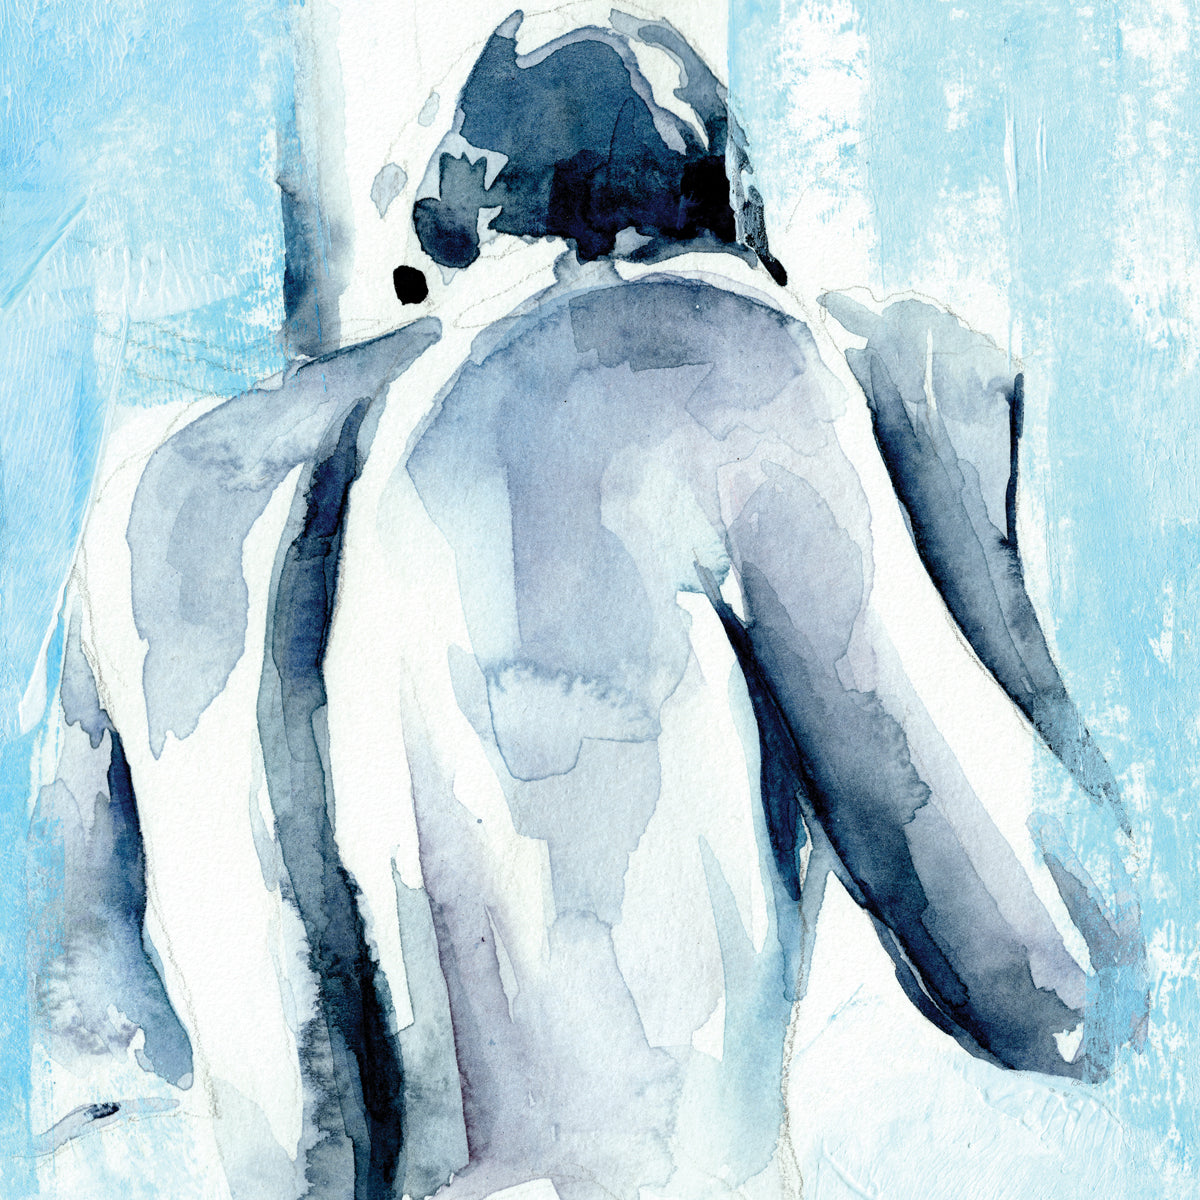 Muscular Man in Waterfall, Showing Buttocks - Giclee Art Print